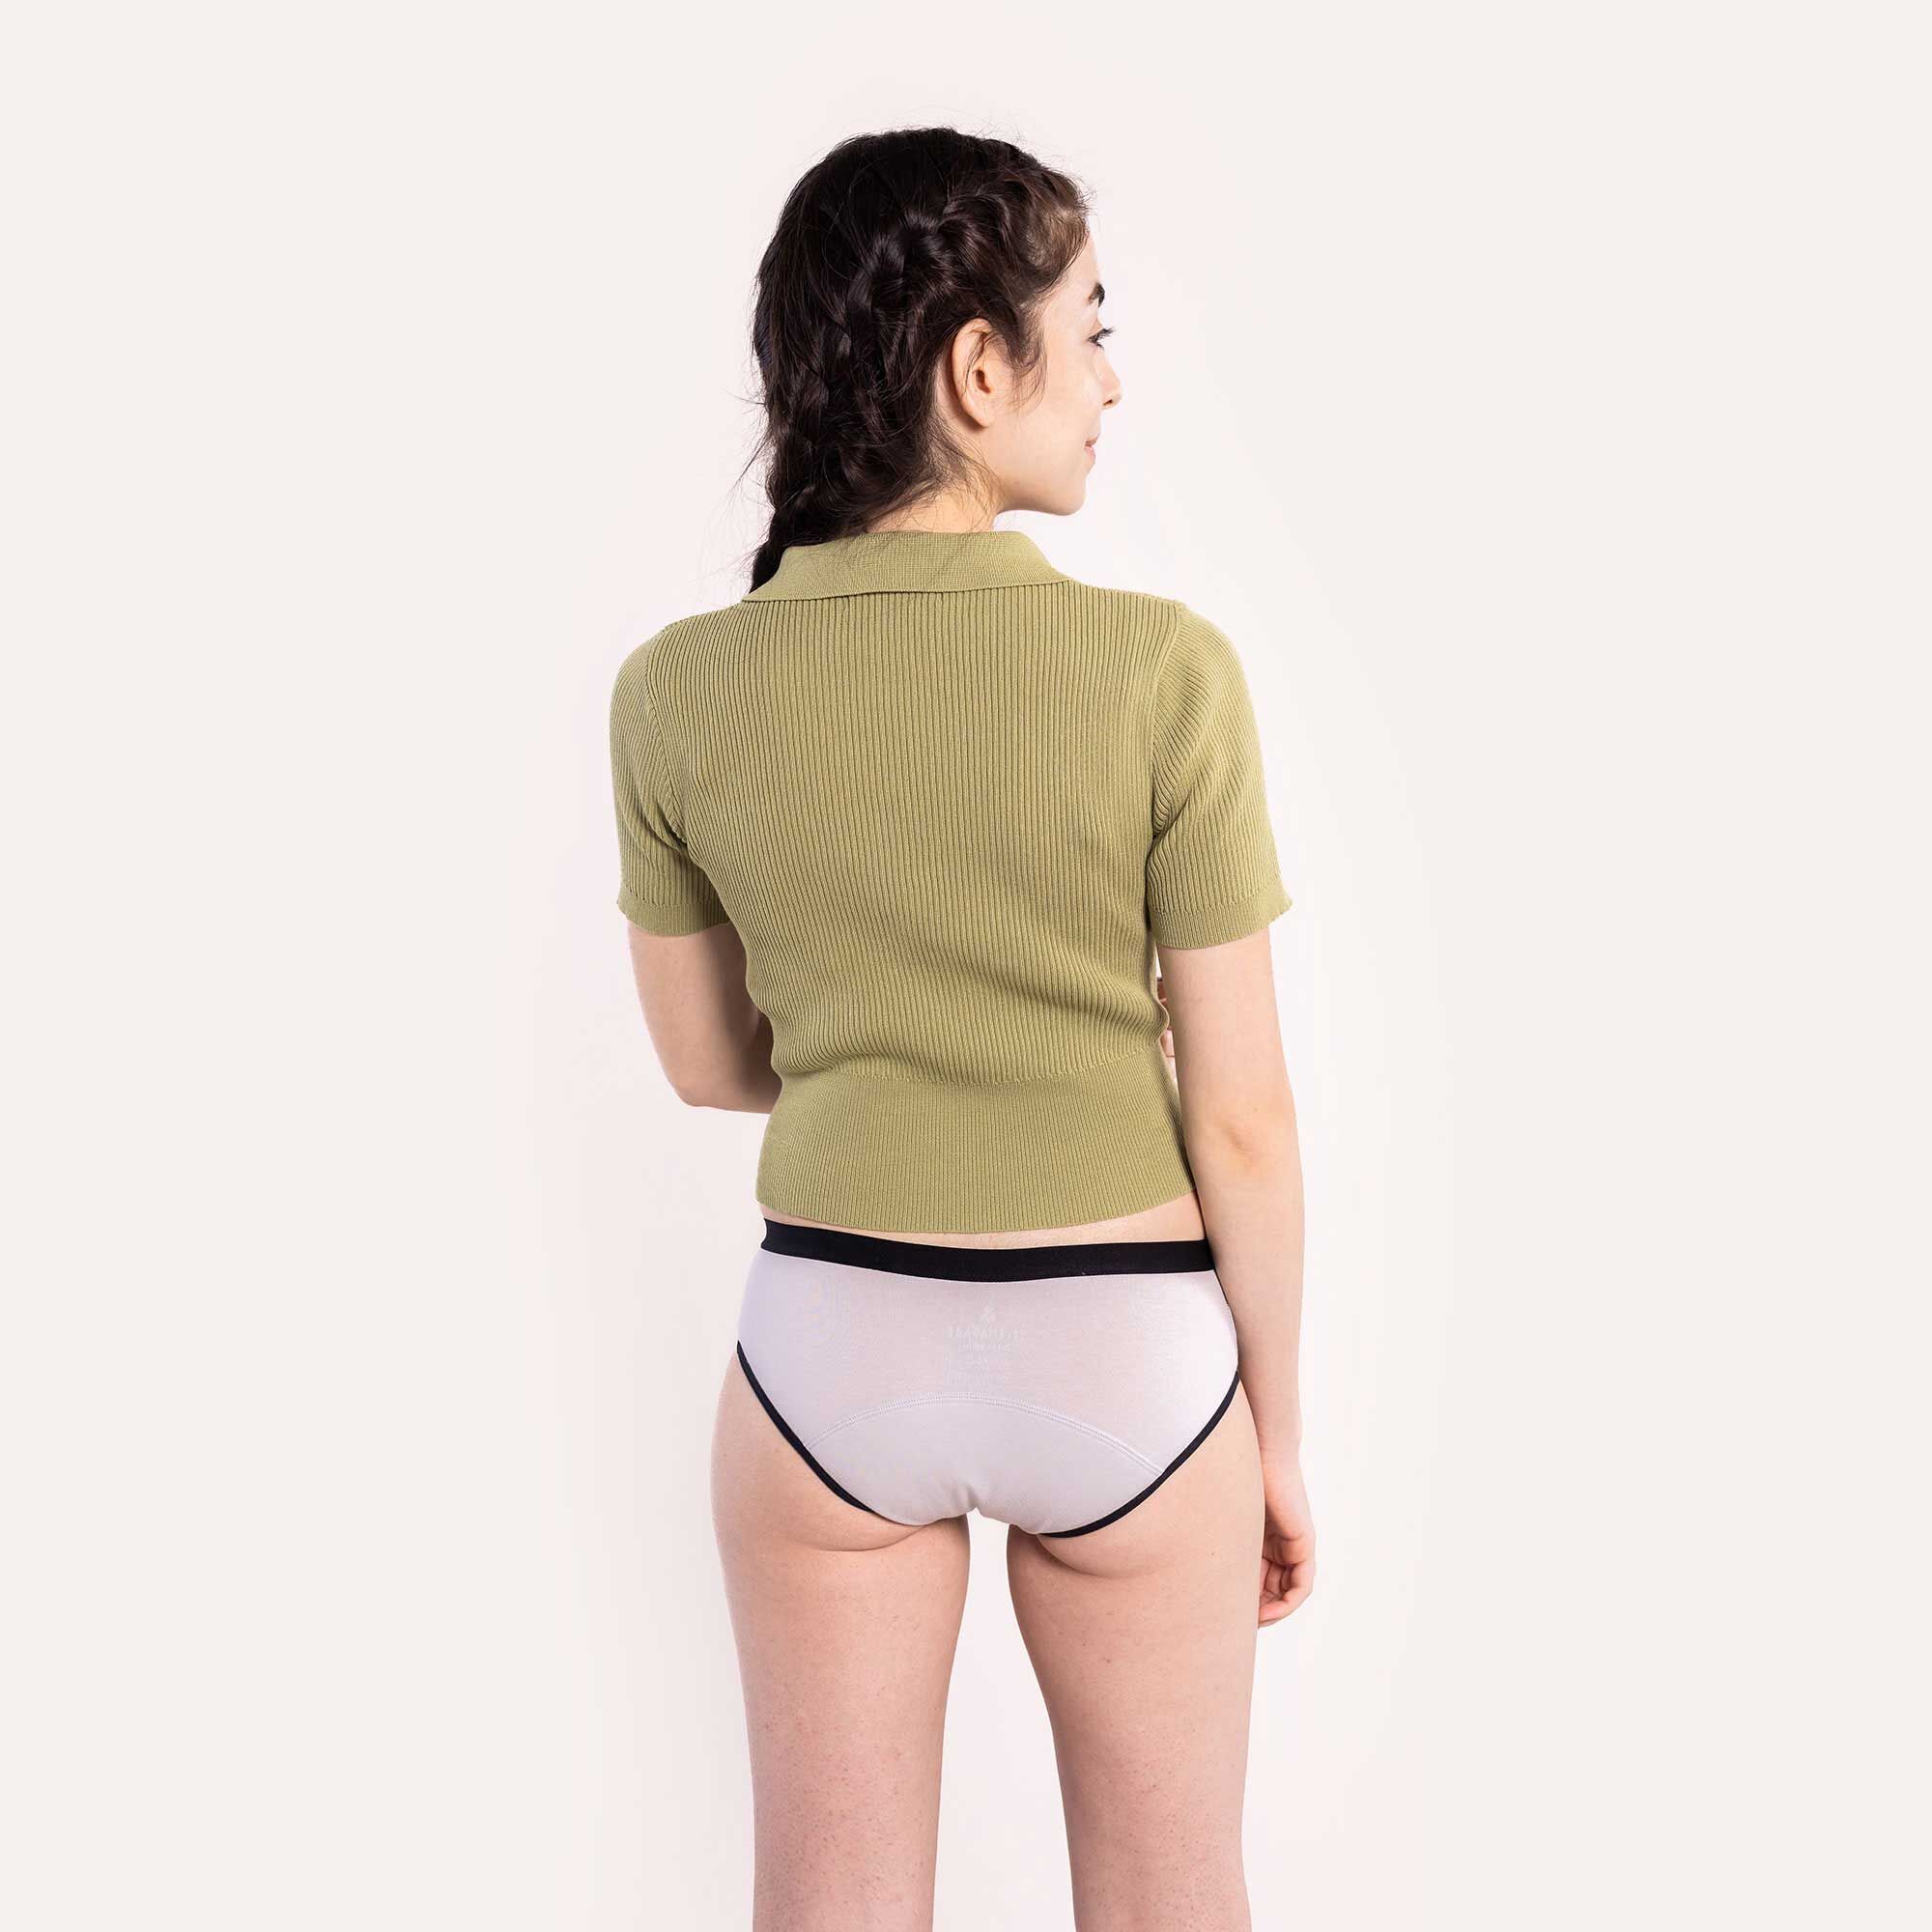 Period Underwear Teens Sporty (Multipack of 5)